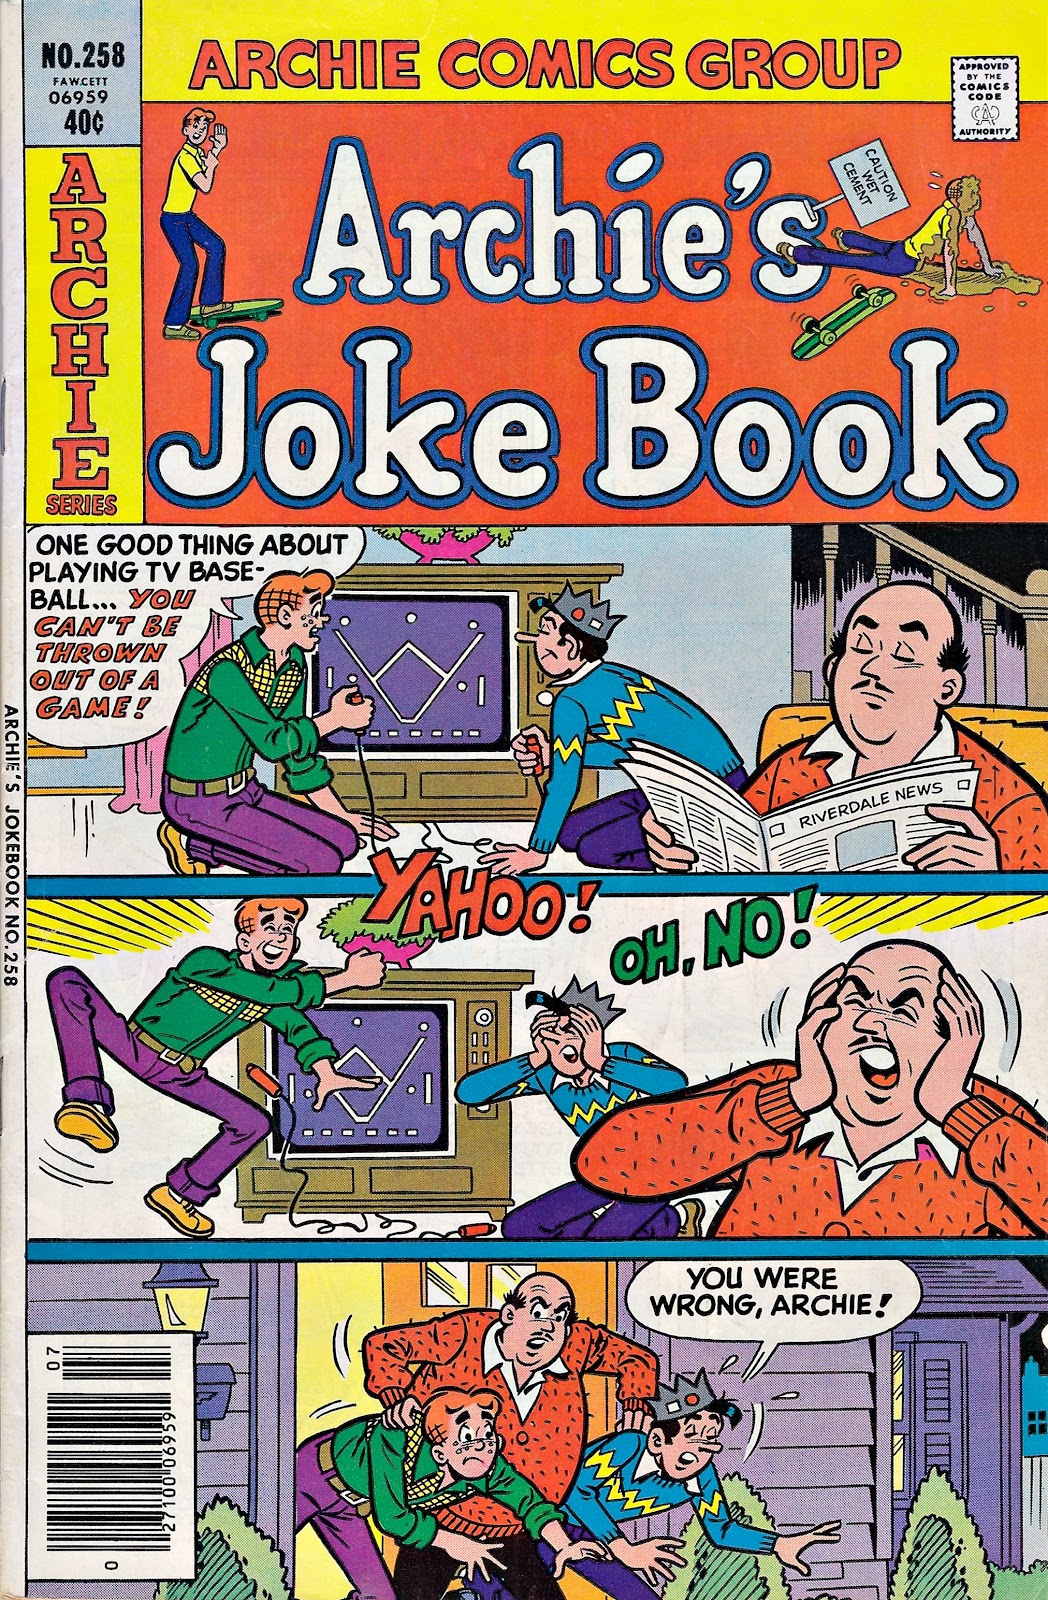 Archie's Joke Book Magazine issue 258 - Page 1